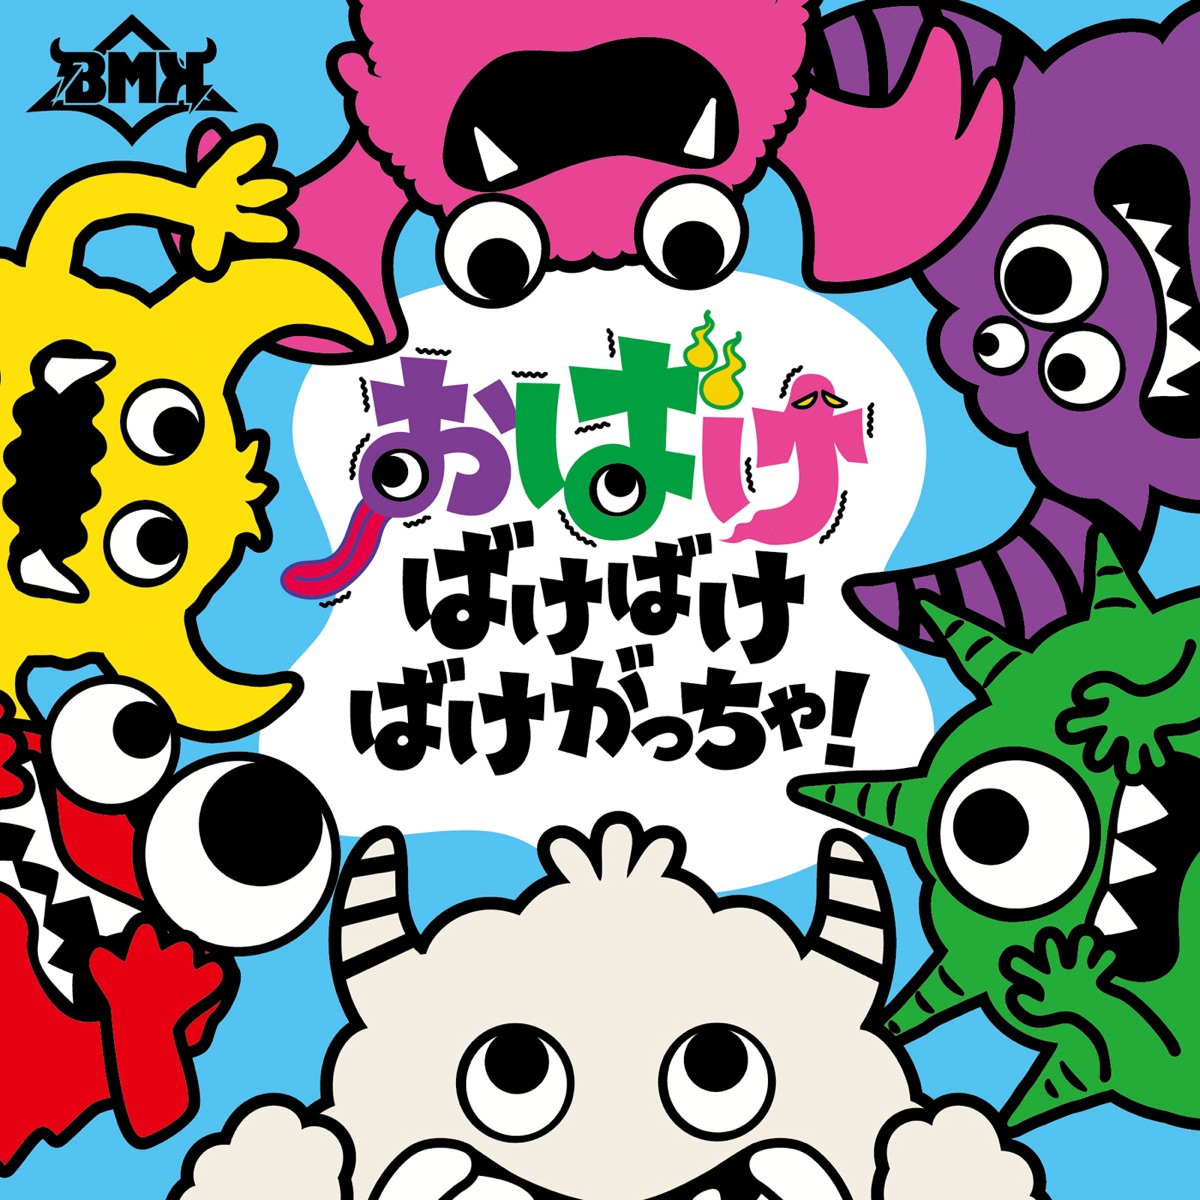 Cover art for『BMK - おばけ ばけばけ ばけがっちゃ！』from the release『OBAKE BAKEBAKE BAKEGOTCHA!